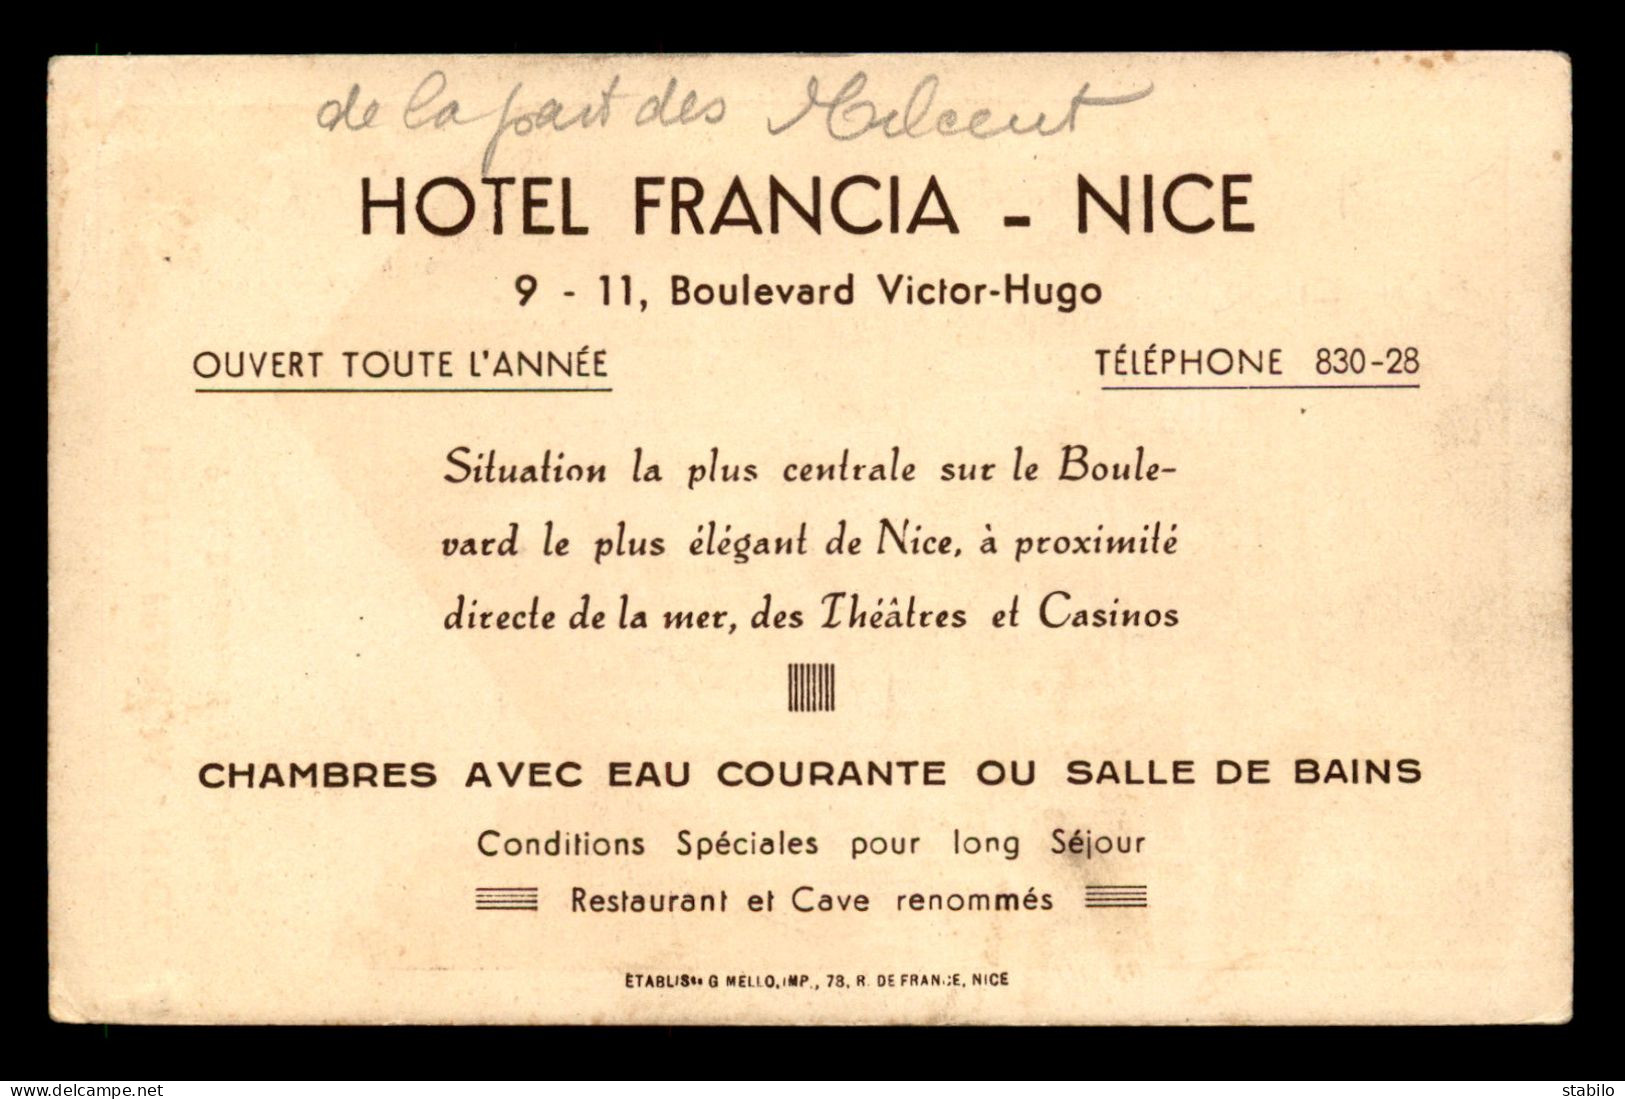 06 - NICE - HOTEL FRANCIA, 9-11 BOULEVARD VICTOR HUGO - Cafés, Hôtels, Restaurants